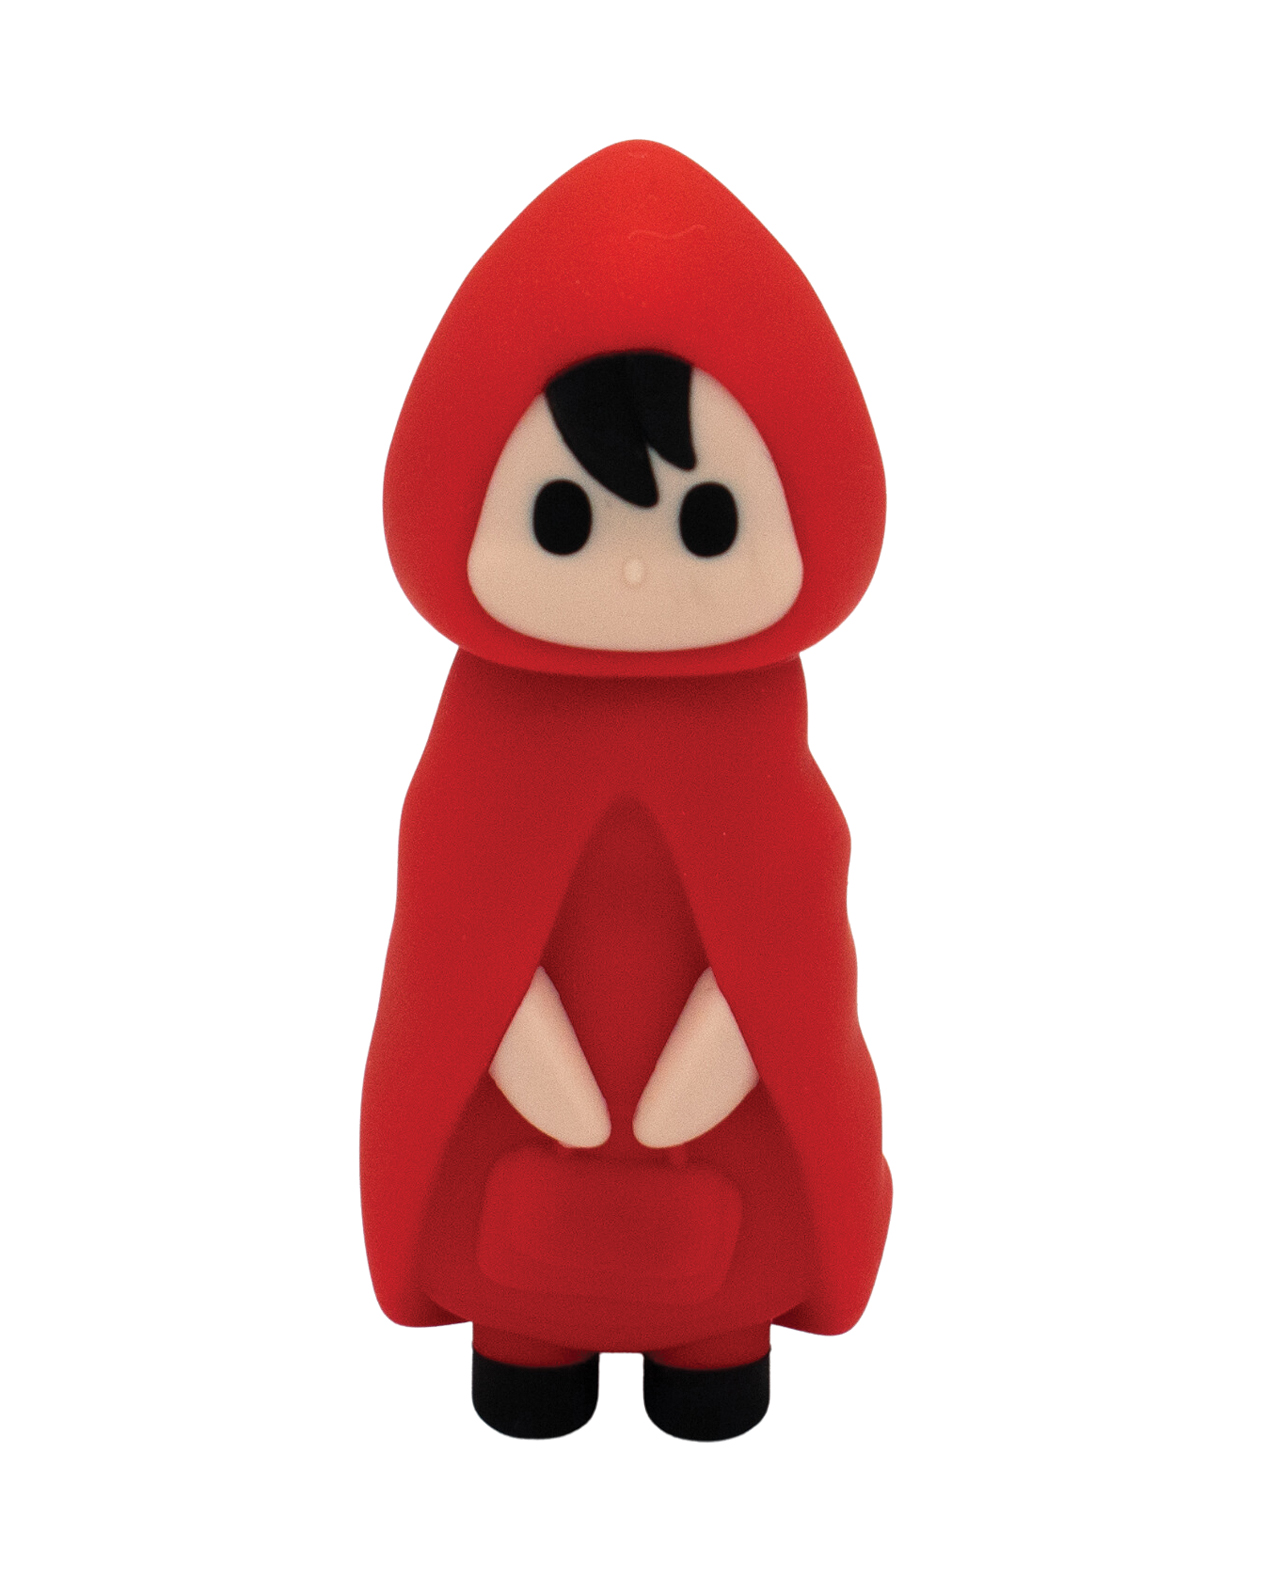 Little Red Bullet wearing cloths